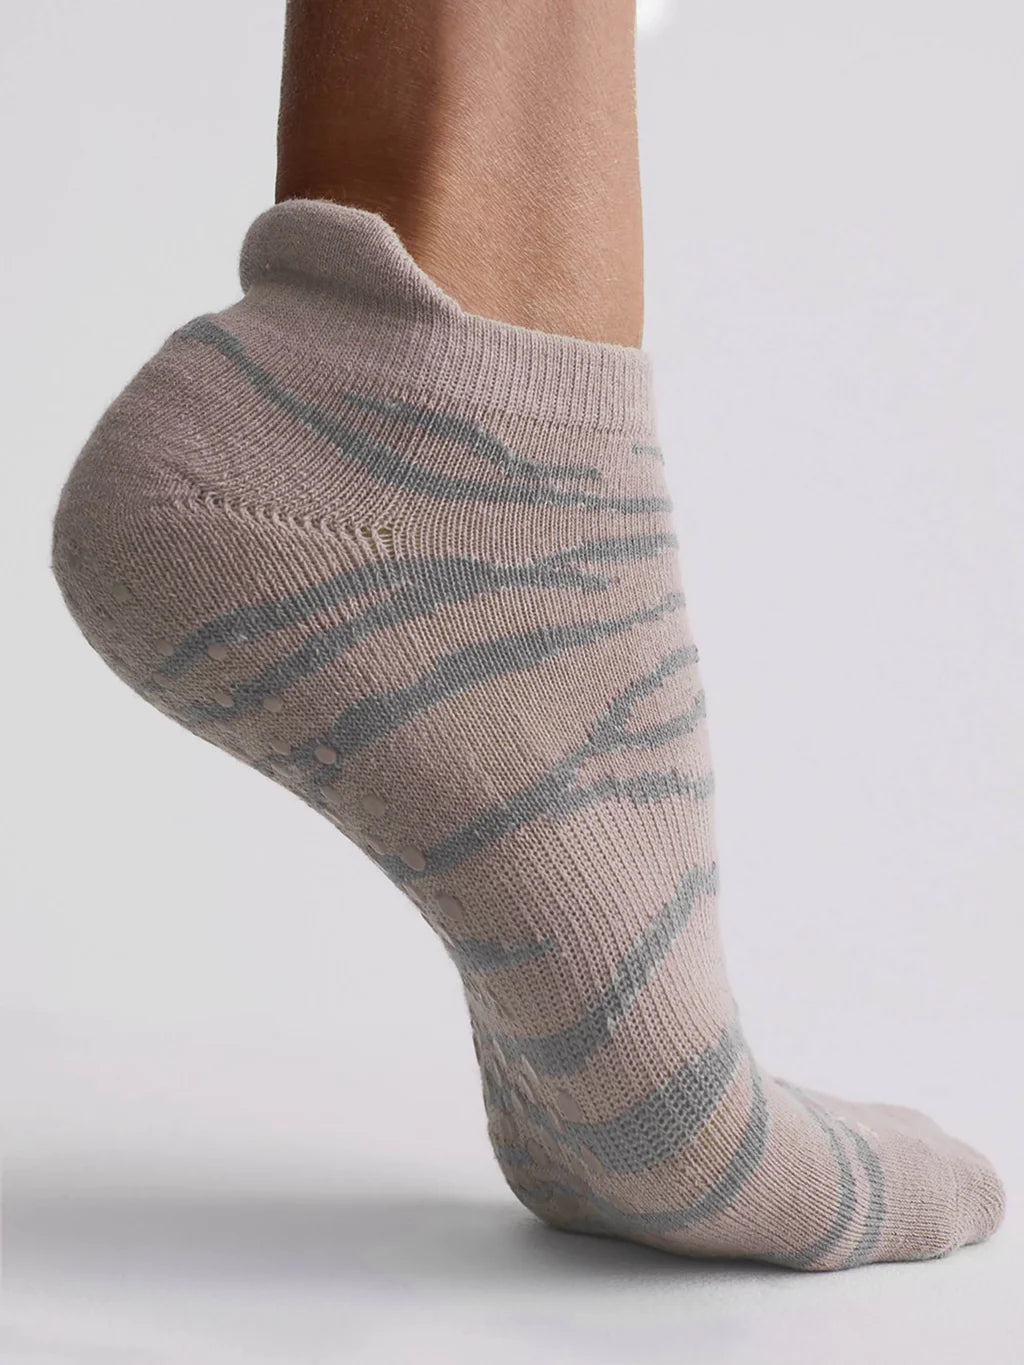 Varley Brisbane Jacquard Grip Sock | Buy Pilates Clothing Online